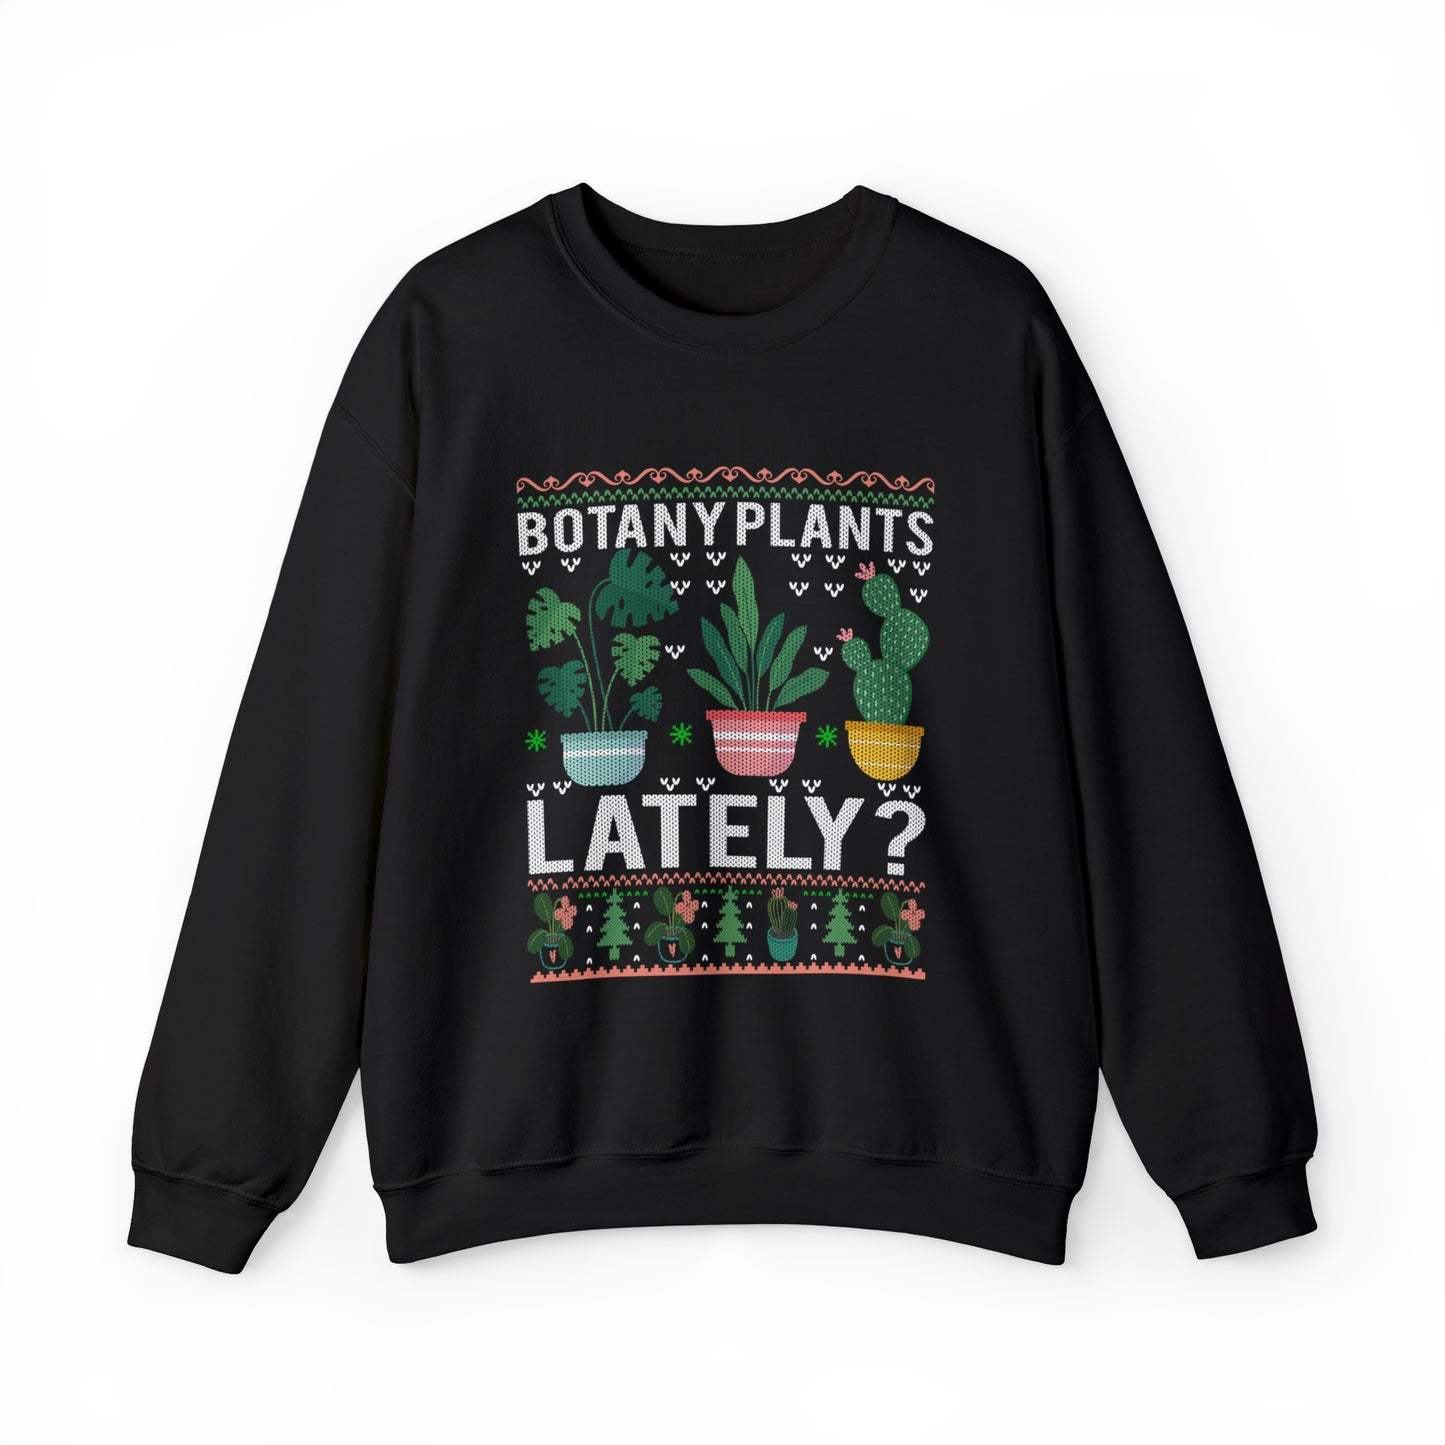 Botany plants lately Unisex Heavy Blend Crewneck Sweatshirt. Plant themed Christmas ugly sweater for plant lady, gardendr or plant mom